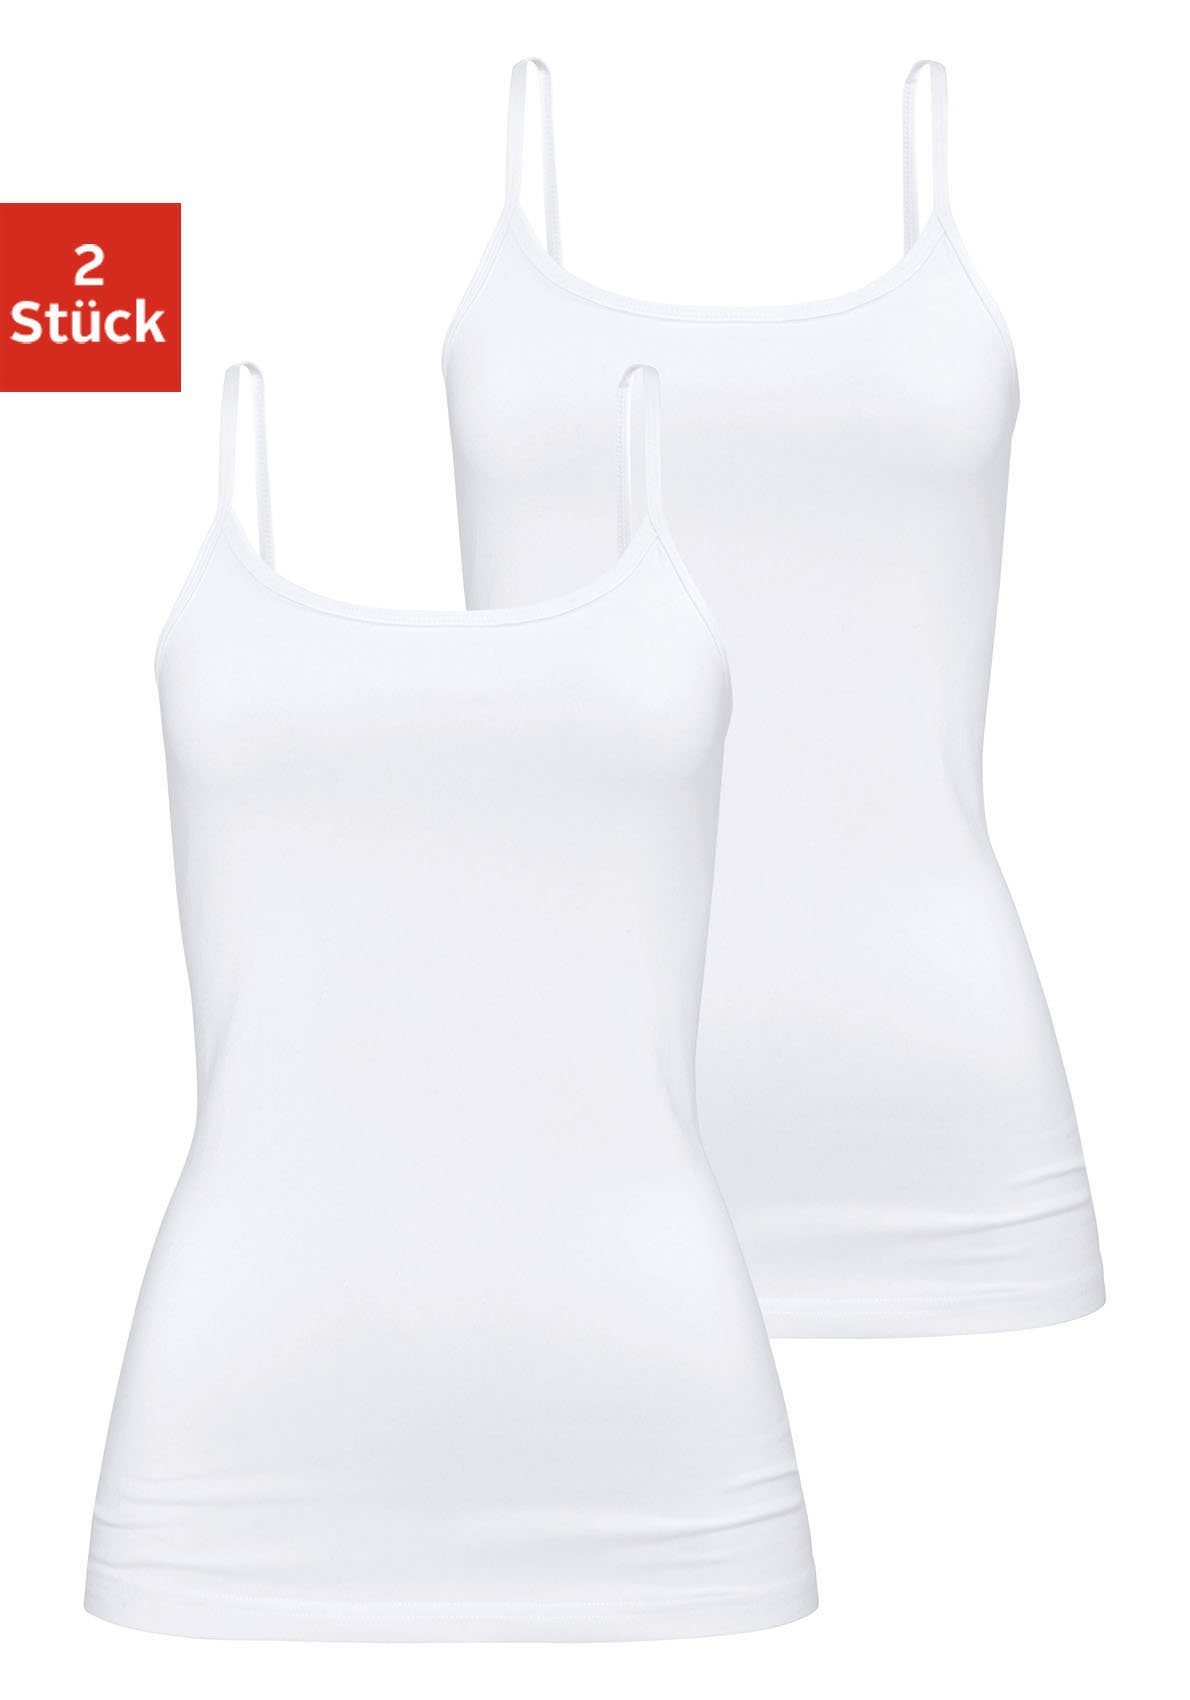 H.I.S Unterhemd (2er-Pack) aus elastischer Baumwoll-Qualität, Spaghettiträger-Top, Unterziehshirt weiß